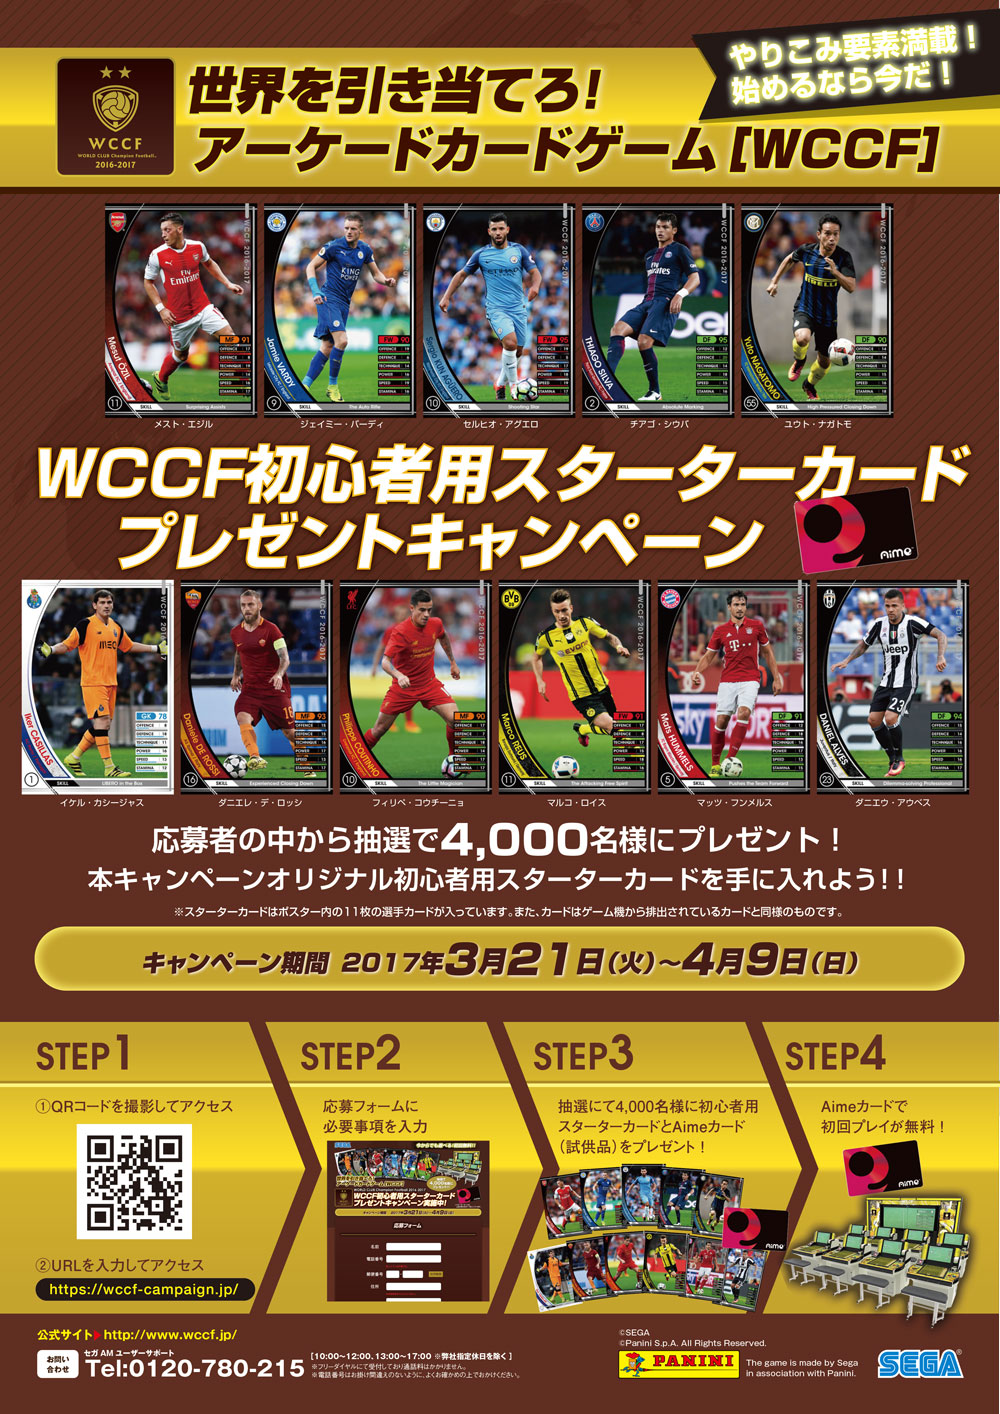 WCCF』初心者用スターターカードプレゼントキャンペーン開催 | サッカーキング